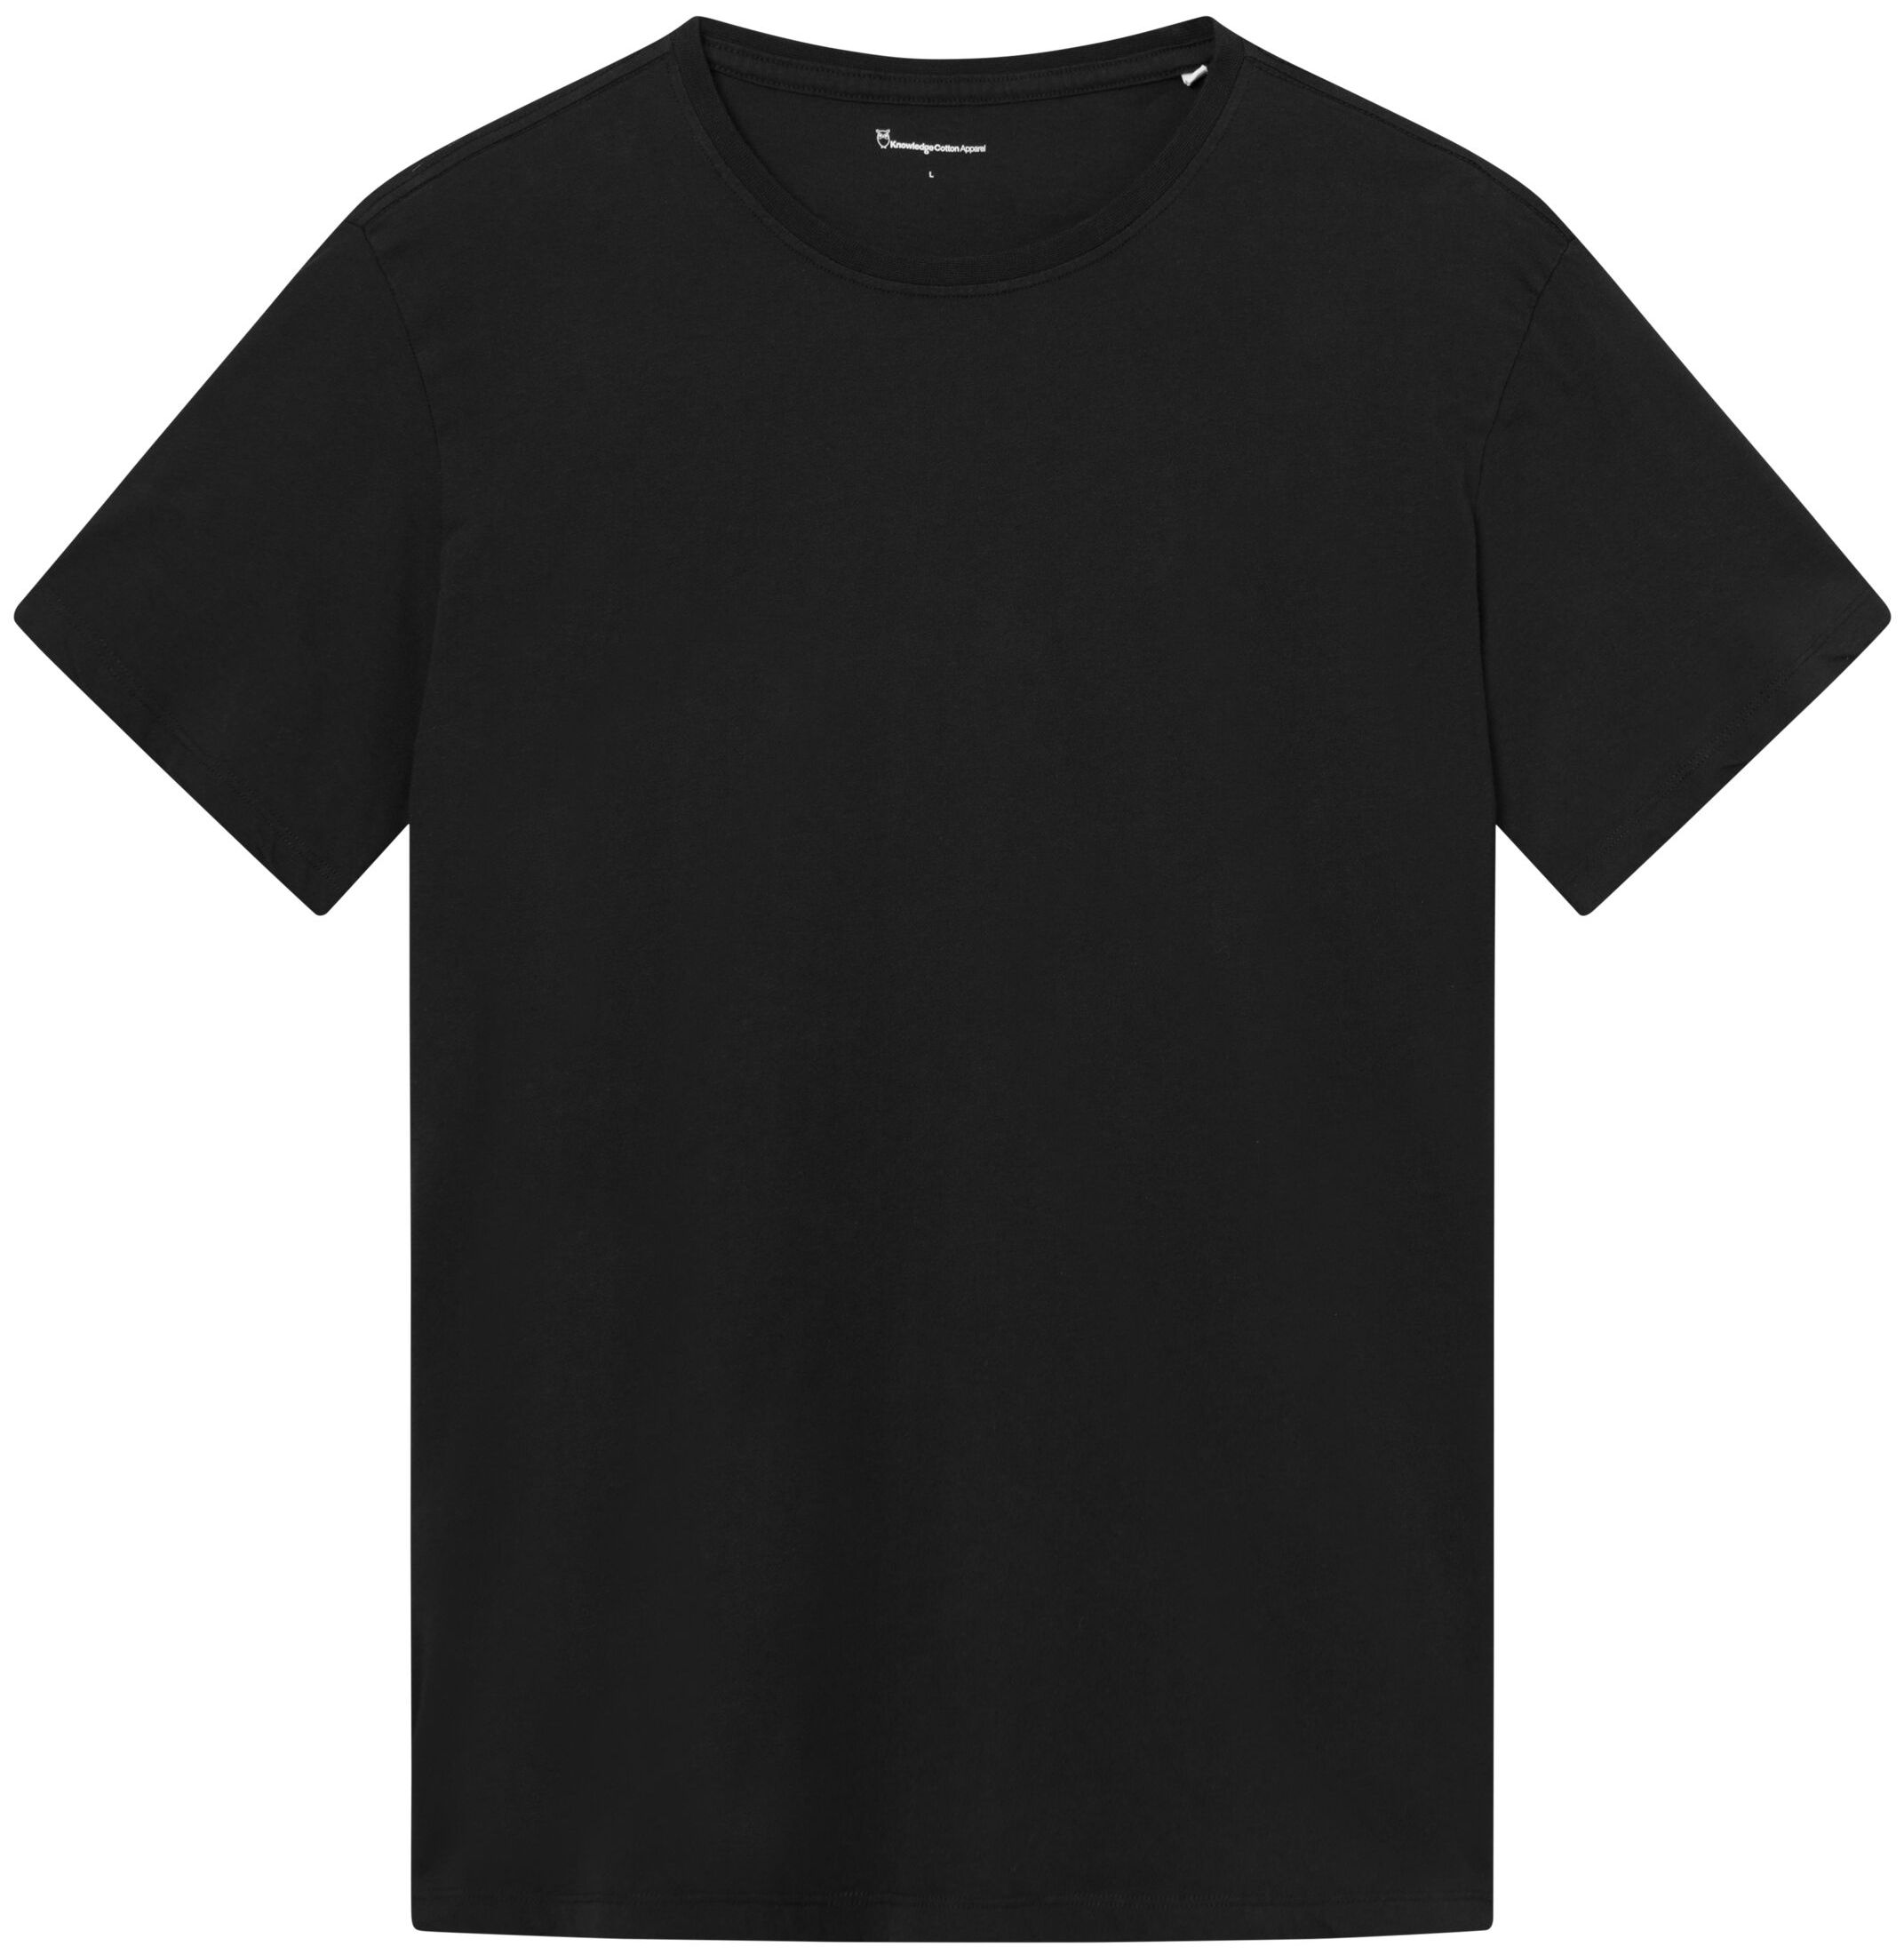 Basic T-Shirt Black Jet